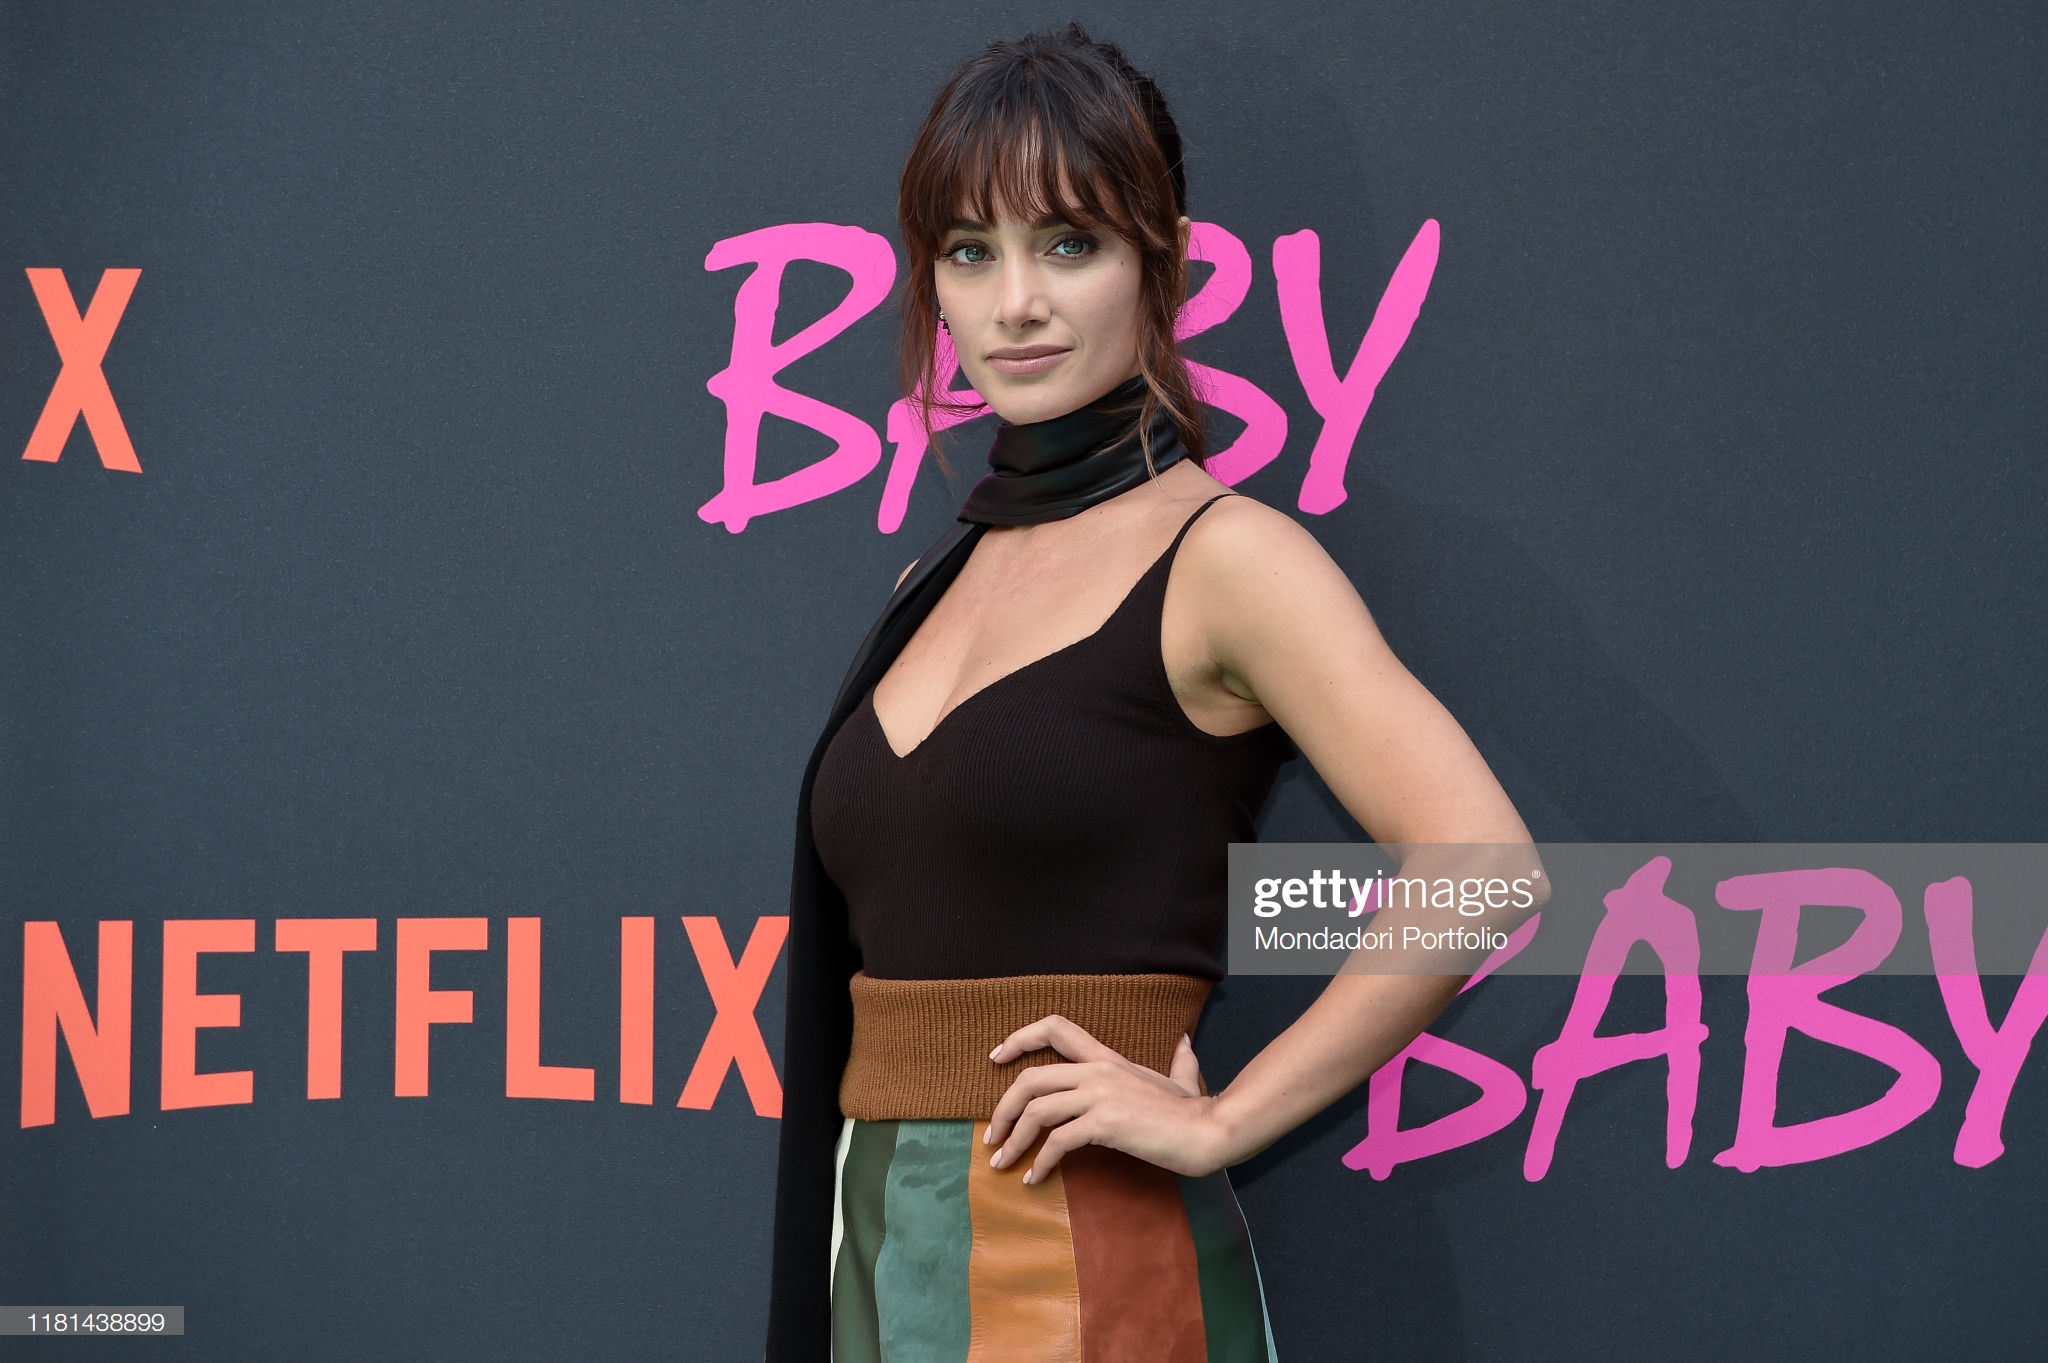 BABY 2 Premiere Denise Capezza attrice netflix natalia getty images red carpet presentazione cast